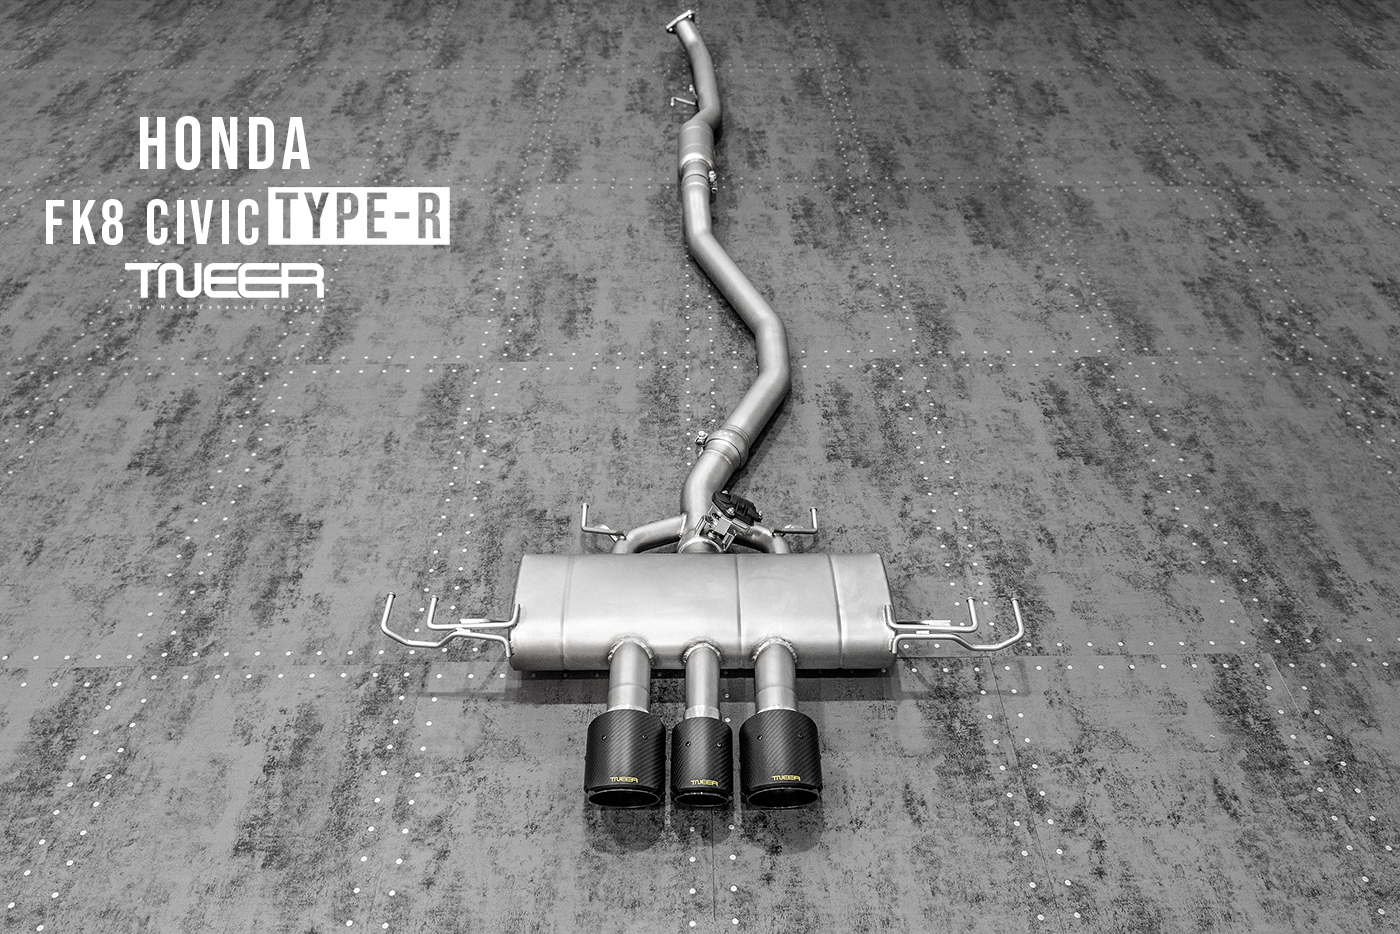 Honda Civic Type-R FK8 TNEER Performance Exhaust System